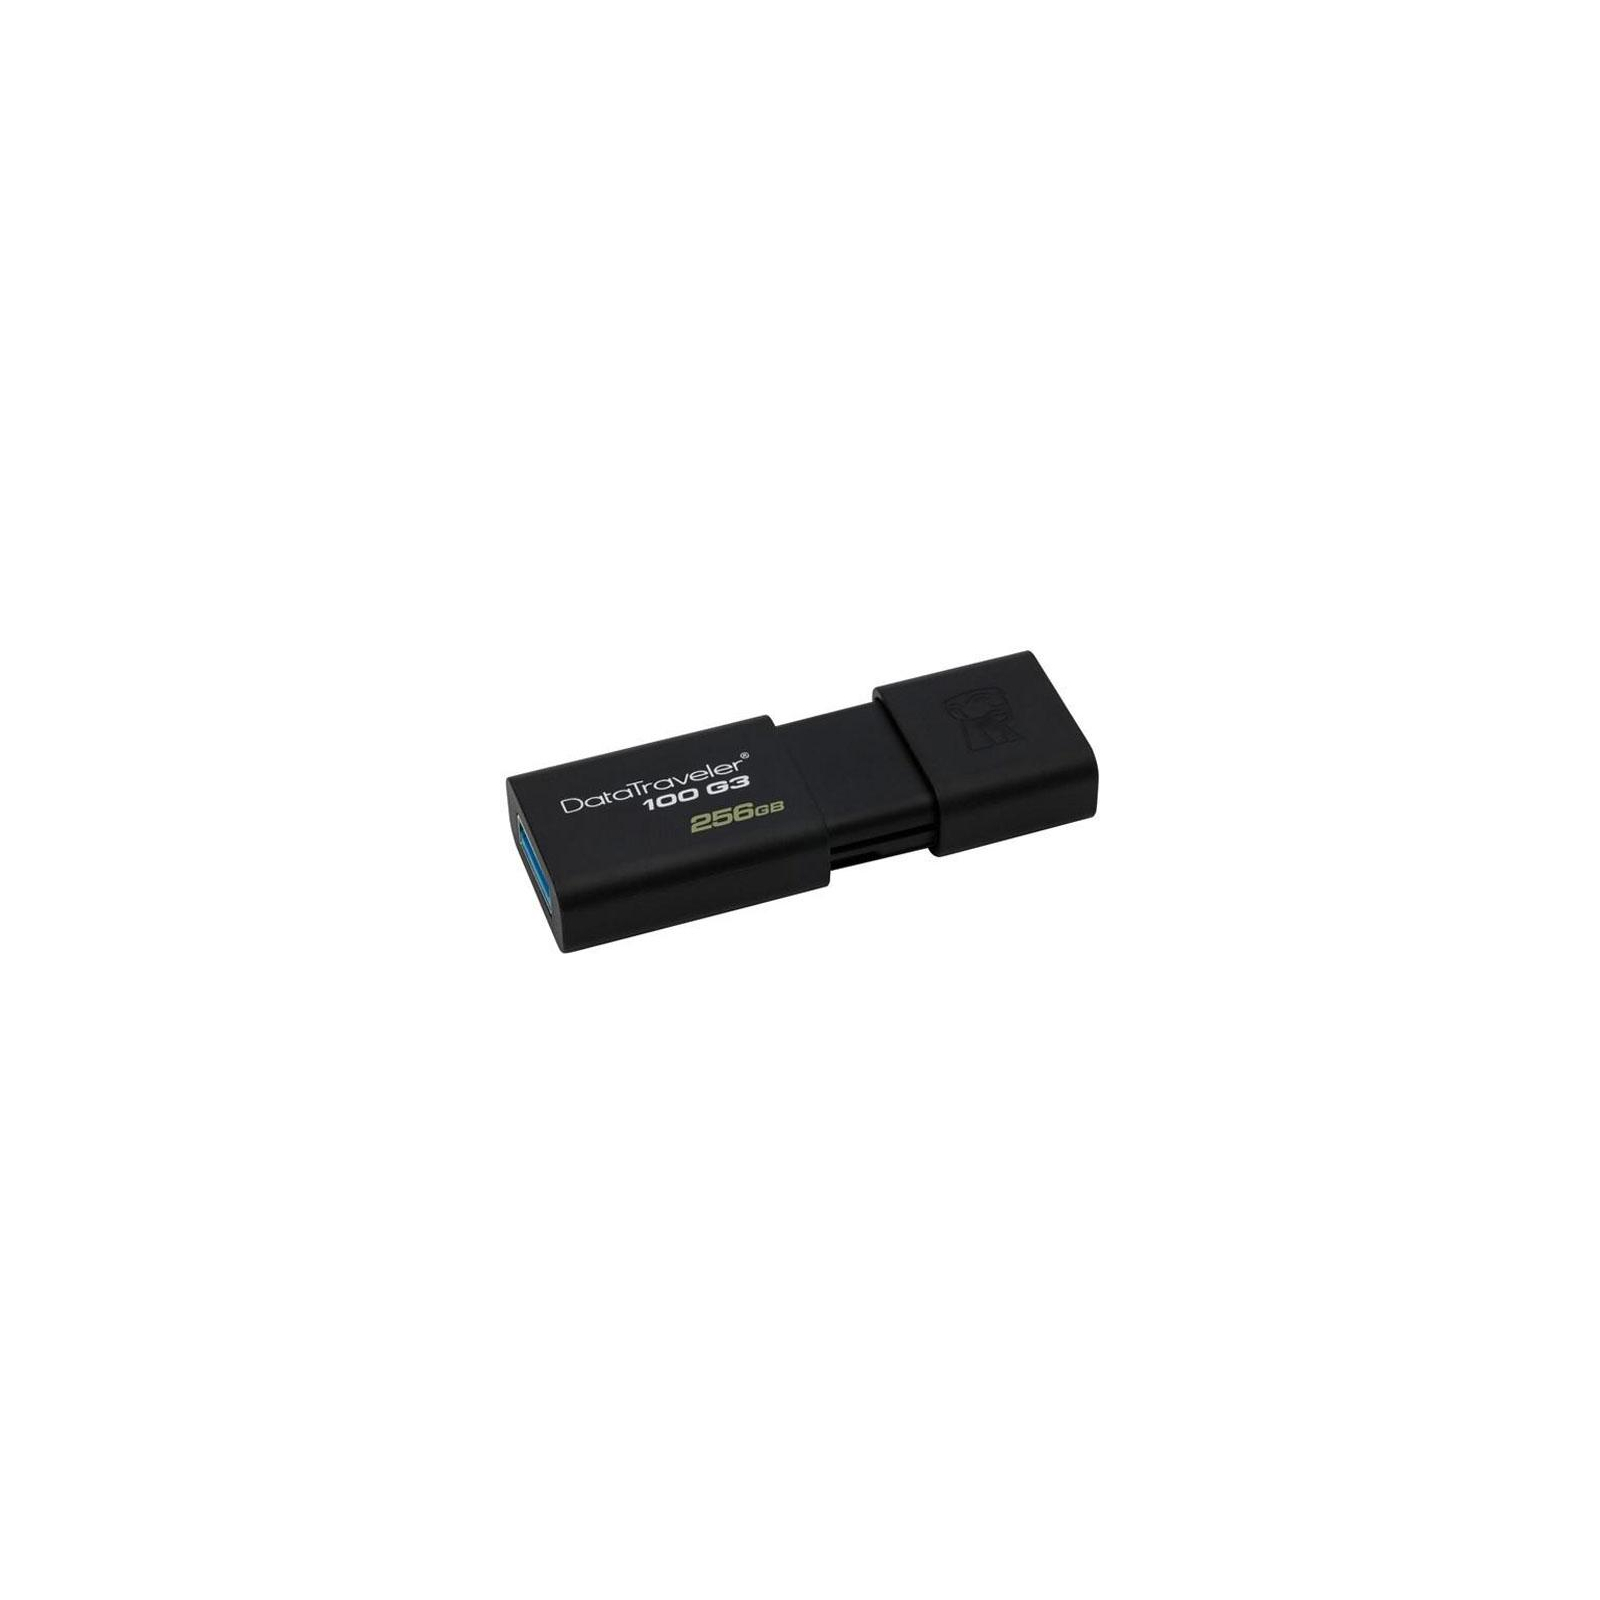 USB флеш накопитель Kingston 256GB DT 100 G3 Black USB 3.0 (DT100G3/256GB) изображение 3